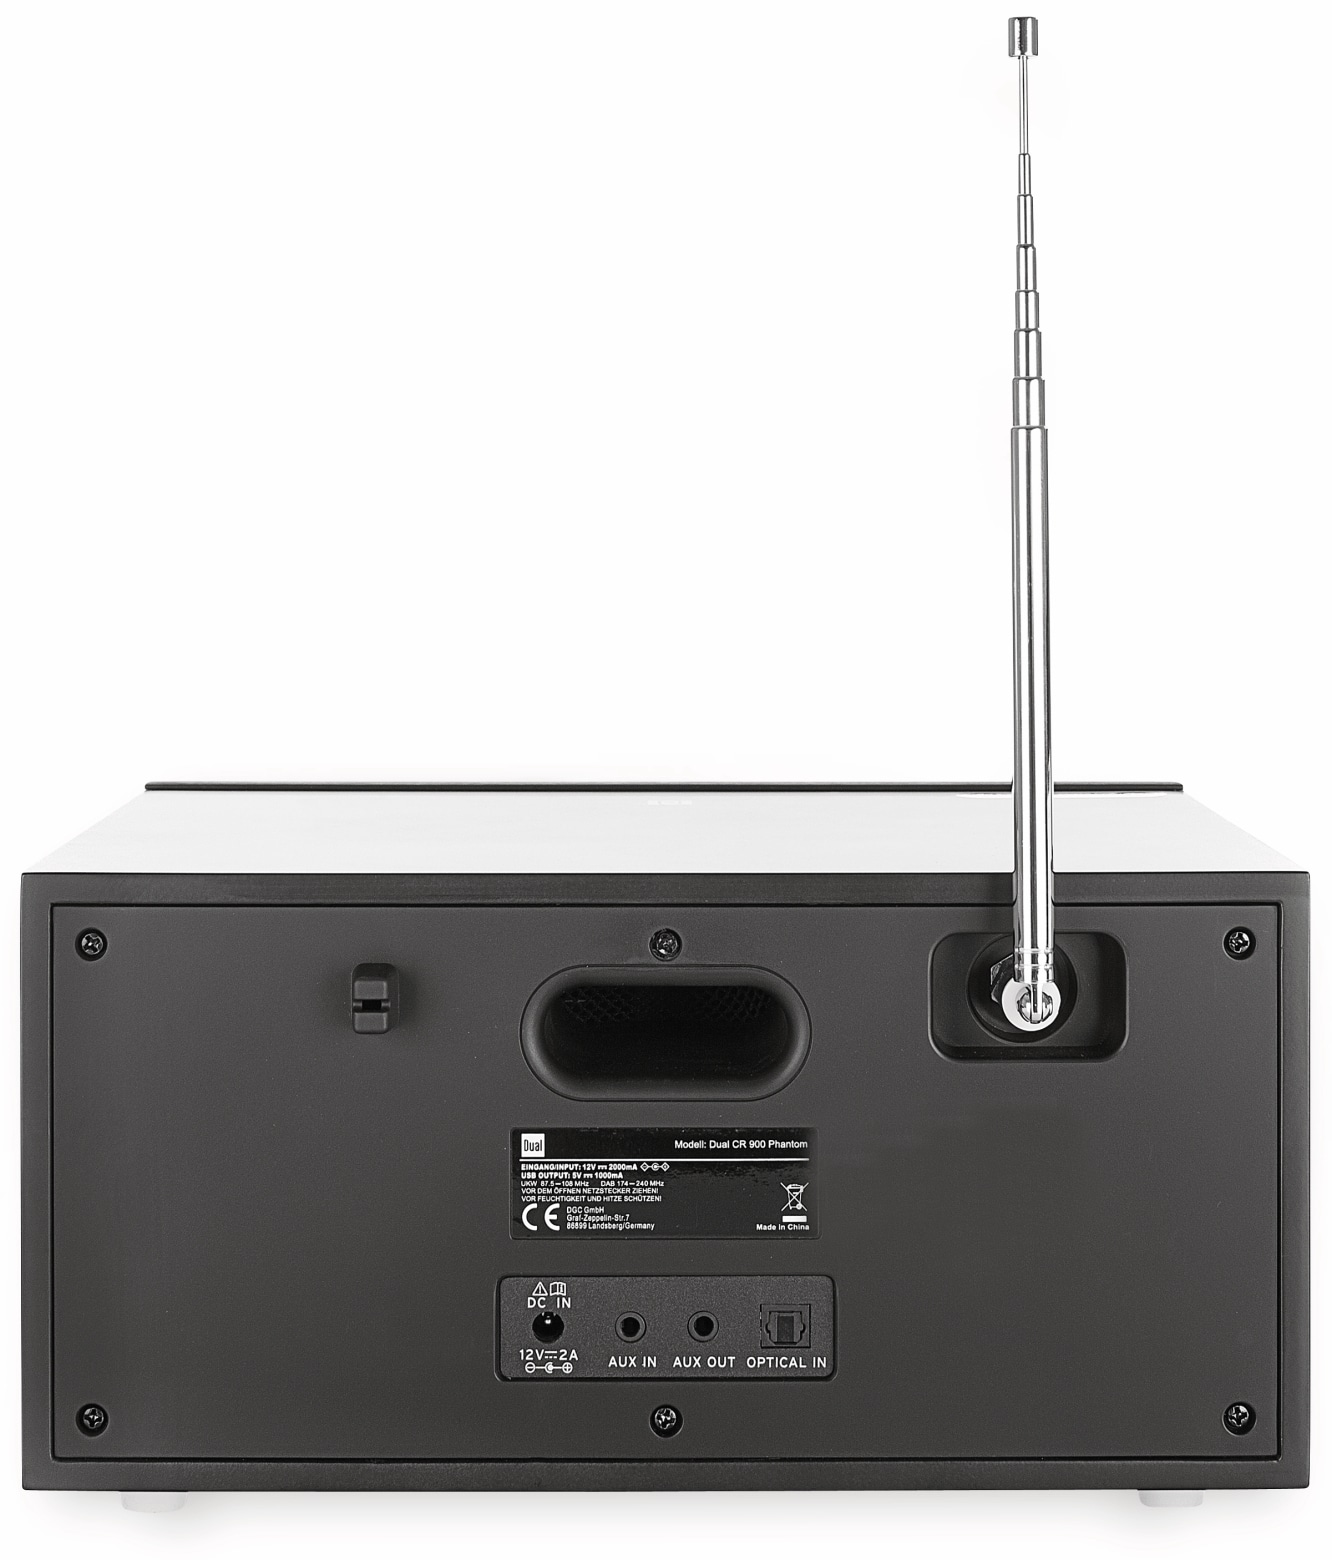 Dual DAB Radio CR 900 Phantom, schwarz, DAB+, Wlan, Bluetooth